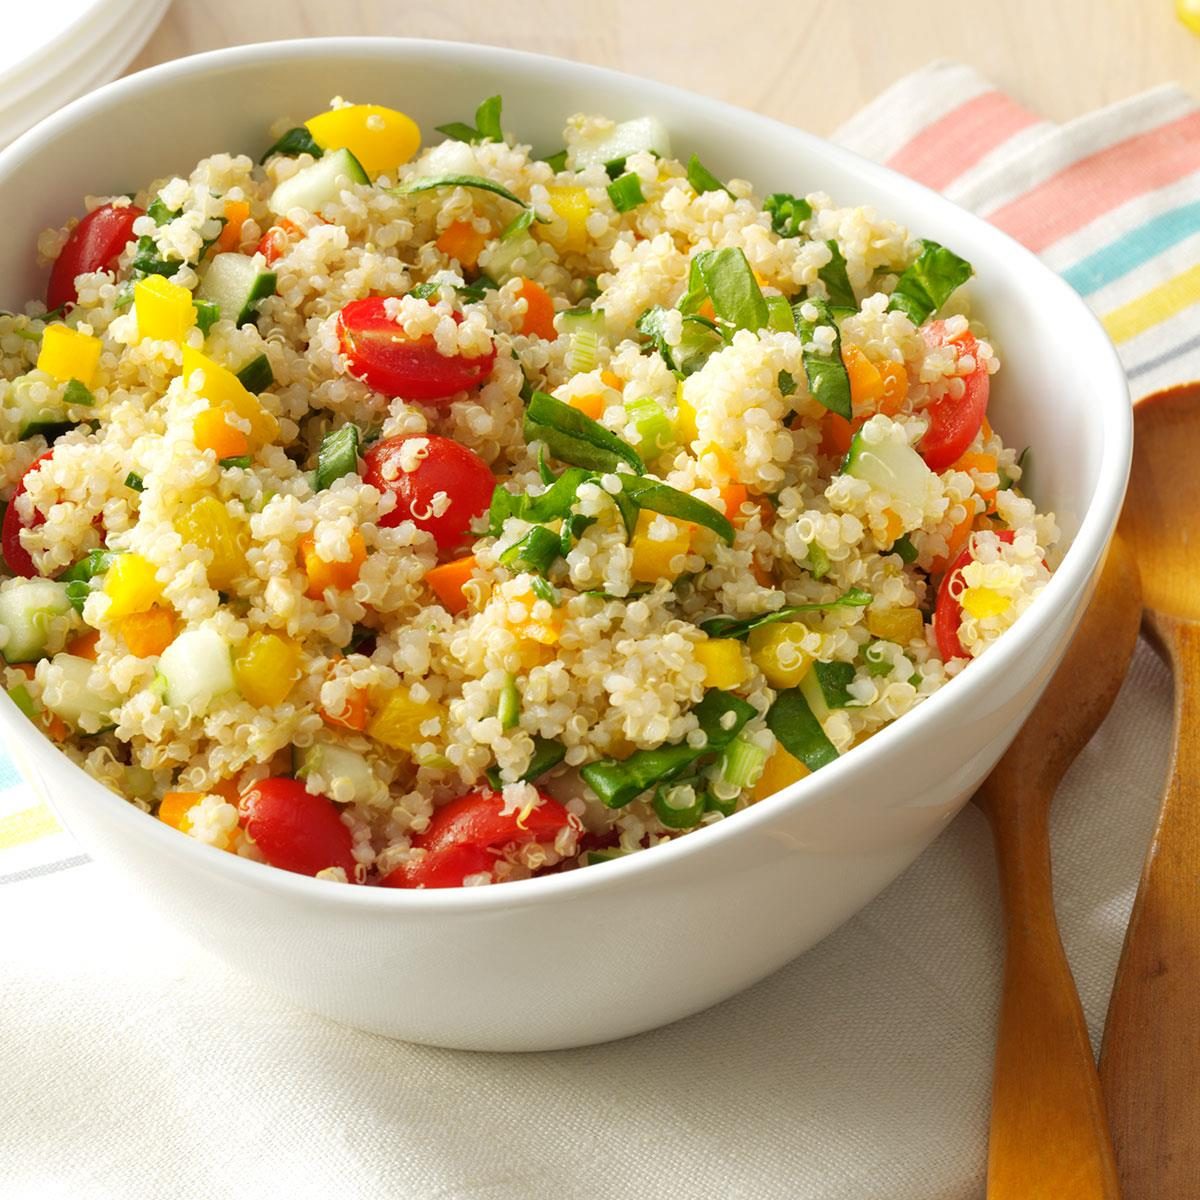 https://www.tasteofhome.com/wp-content/uploads/2018/01/Colorful-Quinoa-Salad_exps174640_SD143204C12_03_2b_RMS-2.jpg?fit=696,696